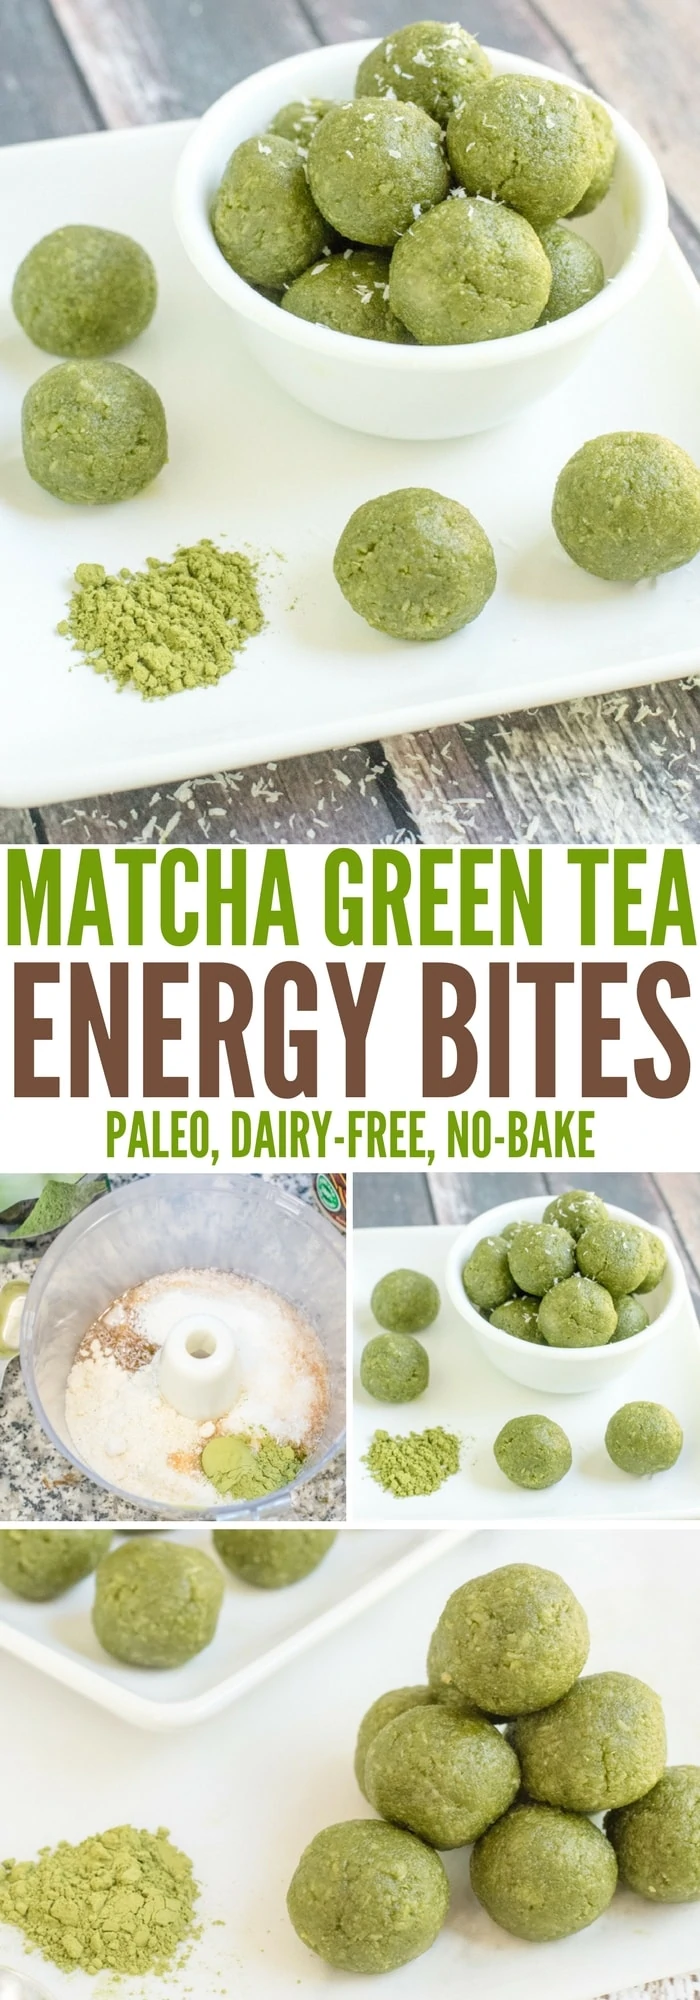 Collage of matcha Green Tea Energy Bites - Paleo, Dairy-Free, No-Bake 